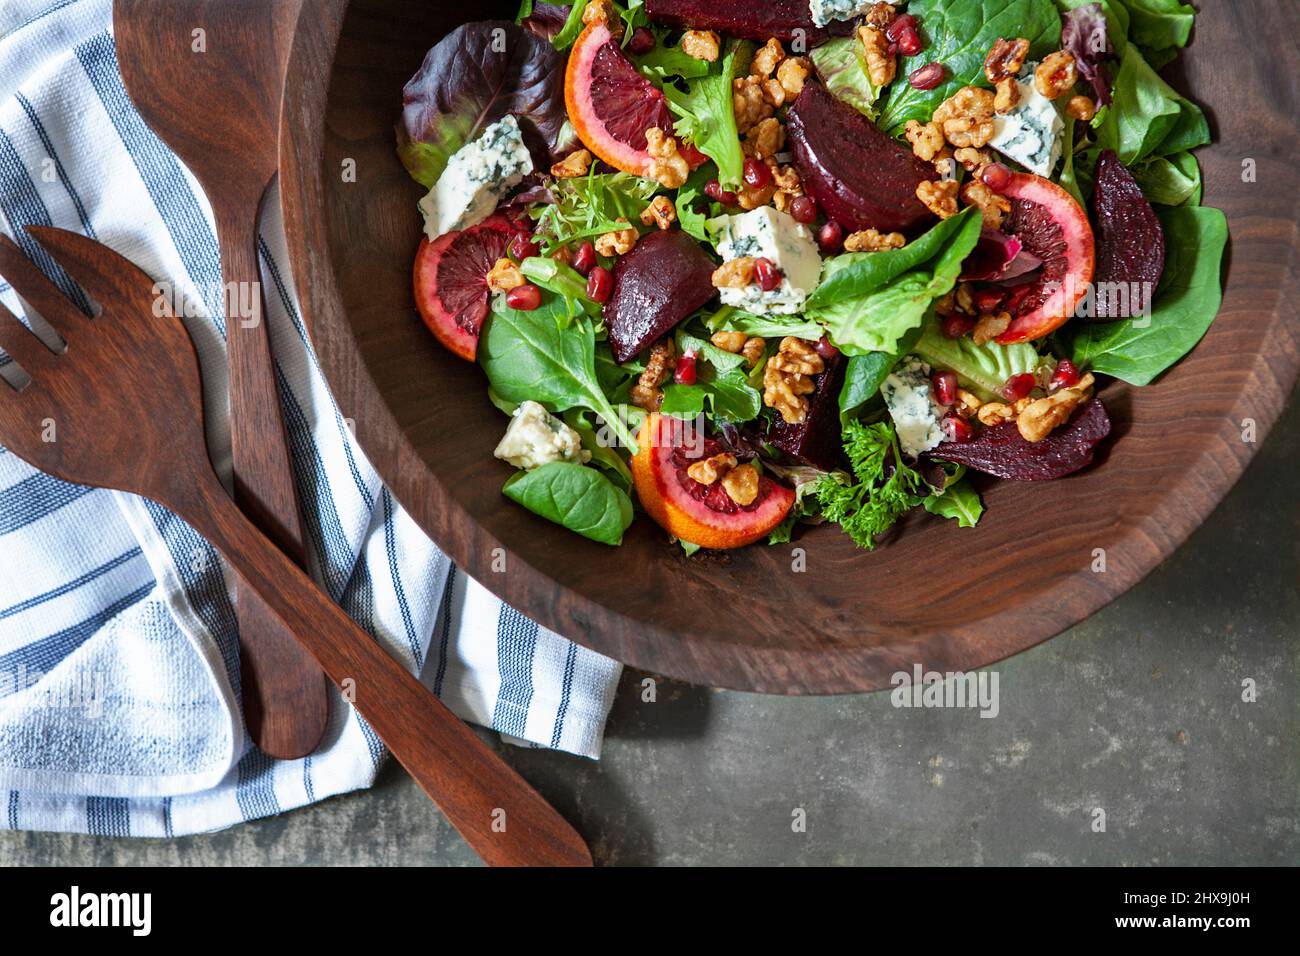 Mixed Green Salad in Wood Bowl Stock Photo